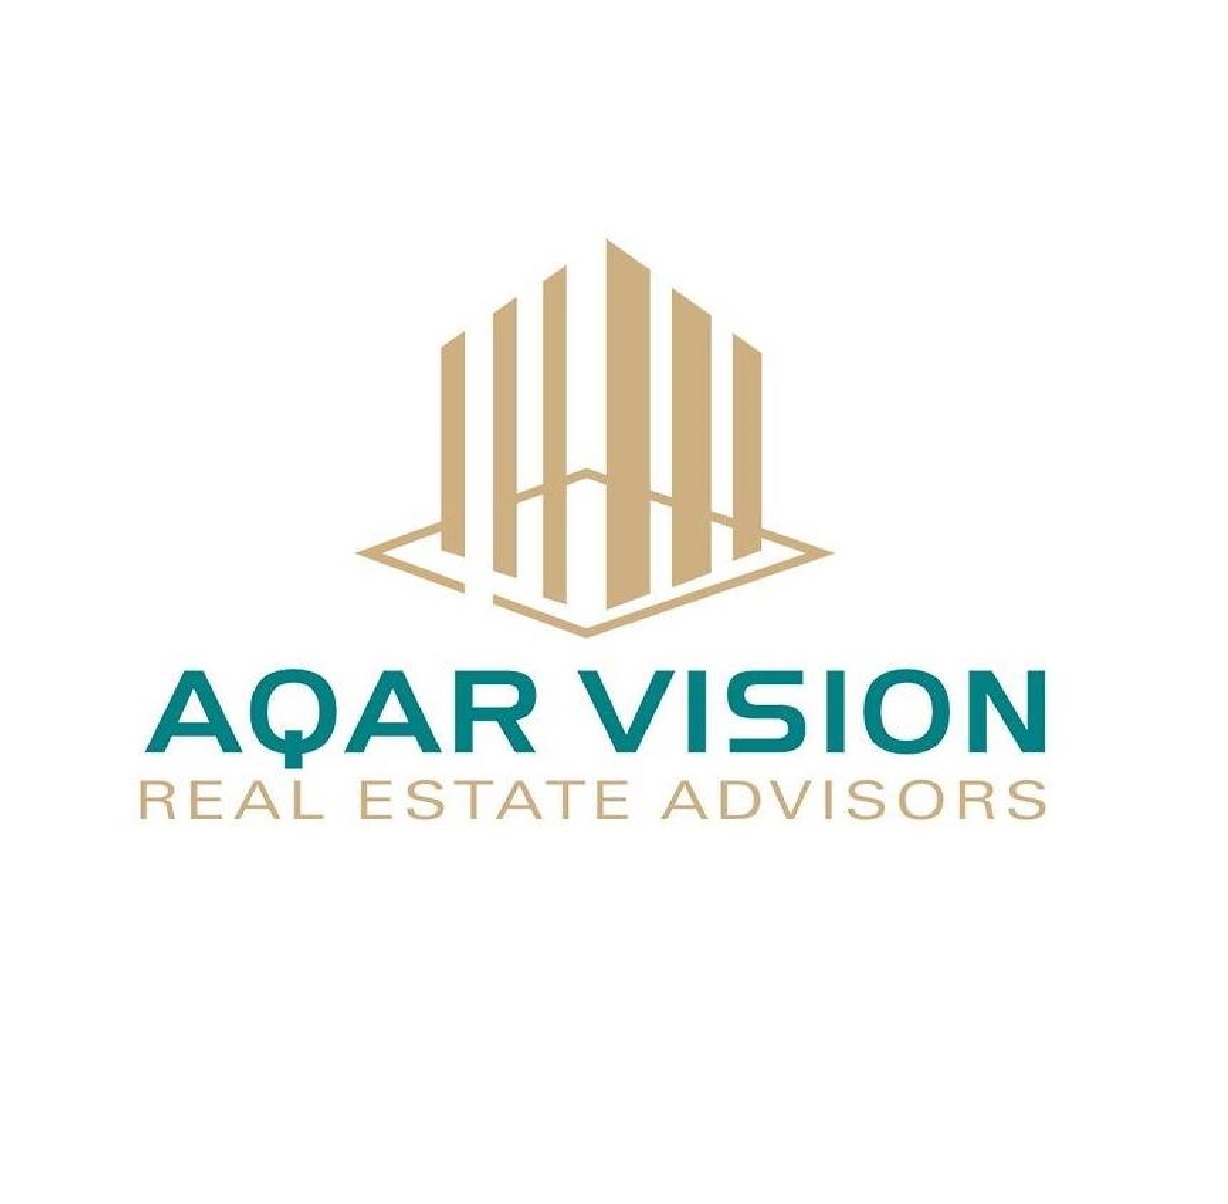 Aqar Vision Real Estate